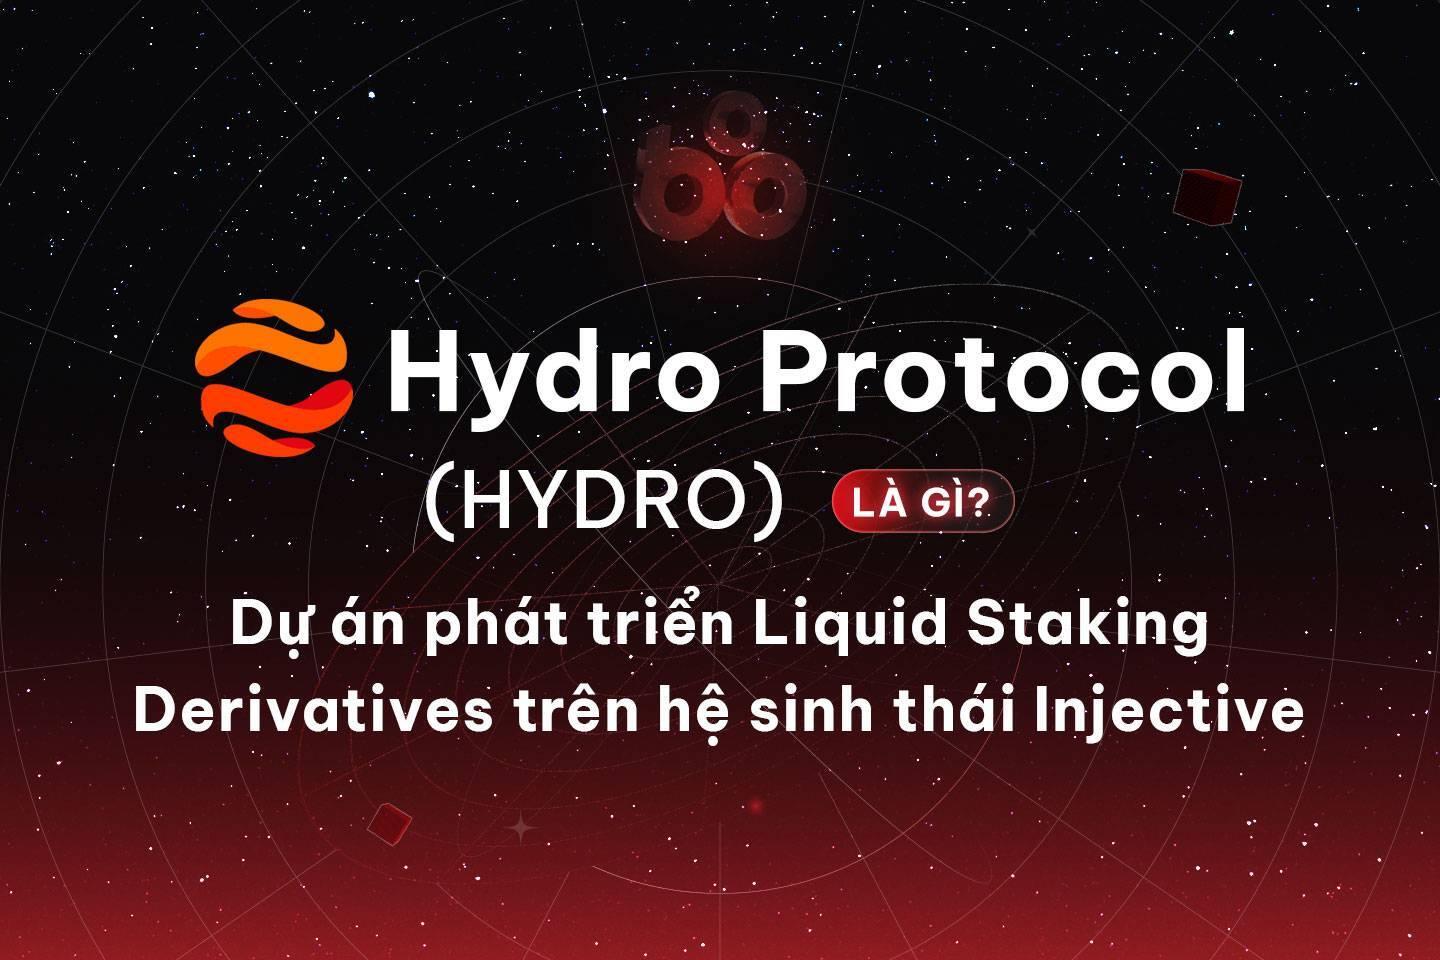 hydro-protocol-hdro-la-gi-du-an-phat-trien-liquid-staking-derivatives-tren-he-sinh-thai-injective